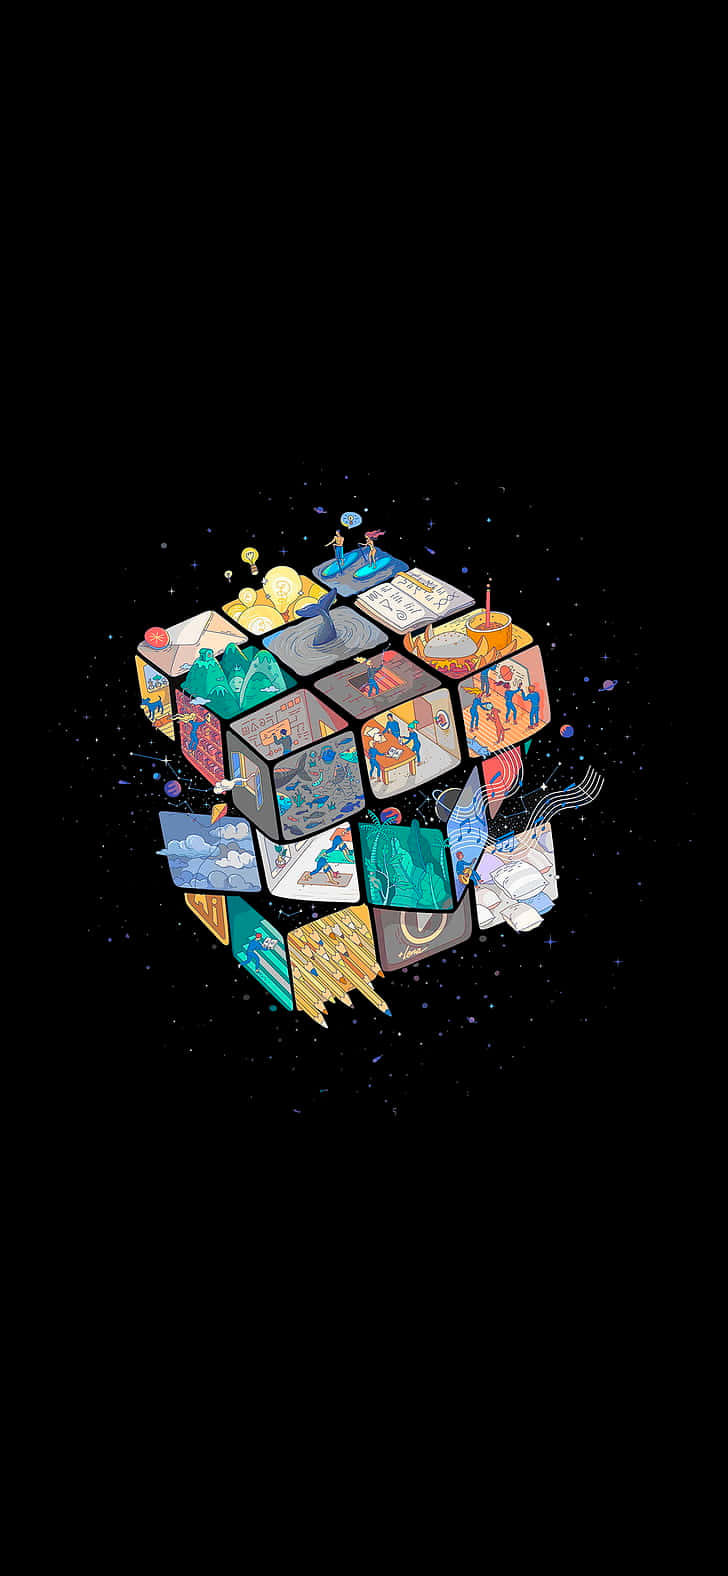 Amoled S Rubik's Cube Wallpaper